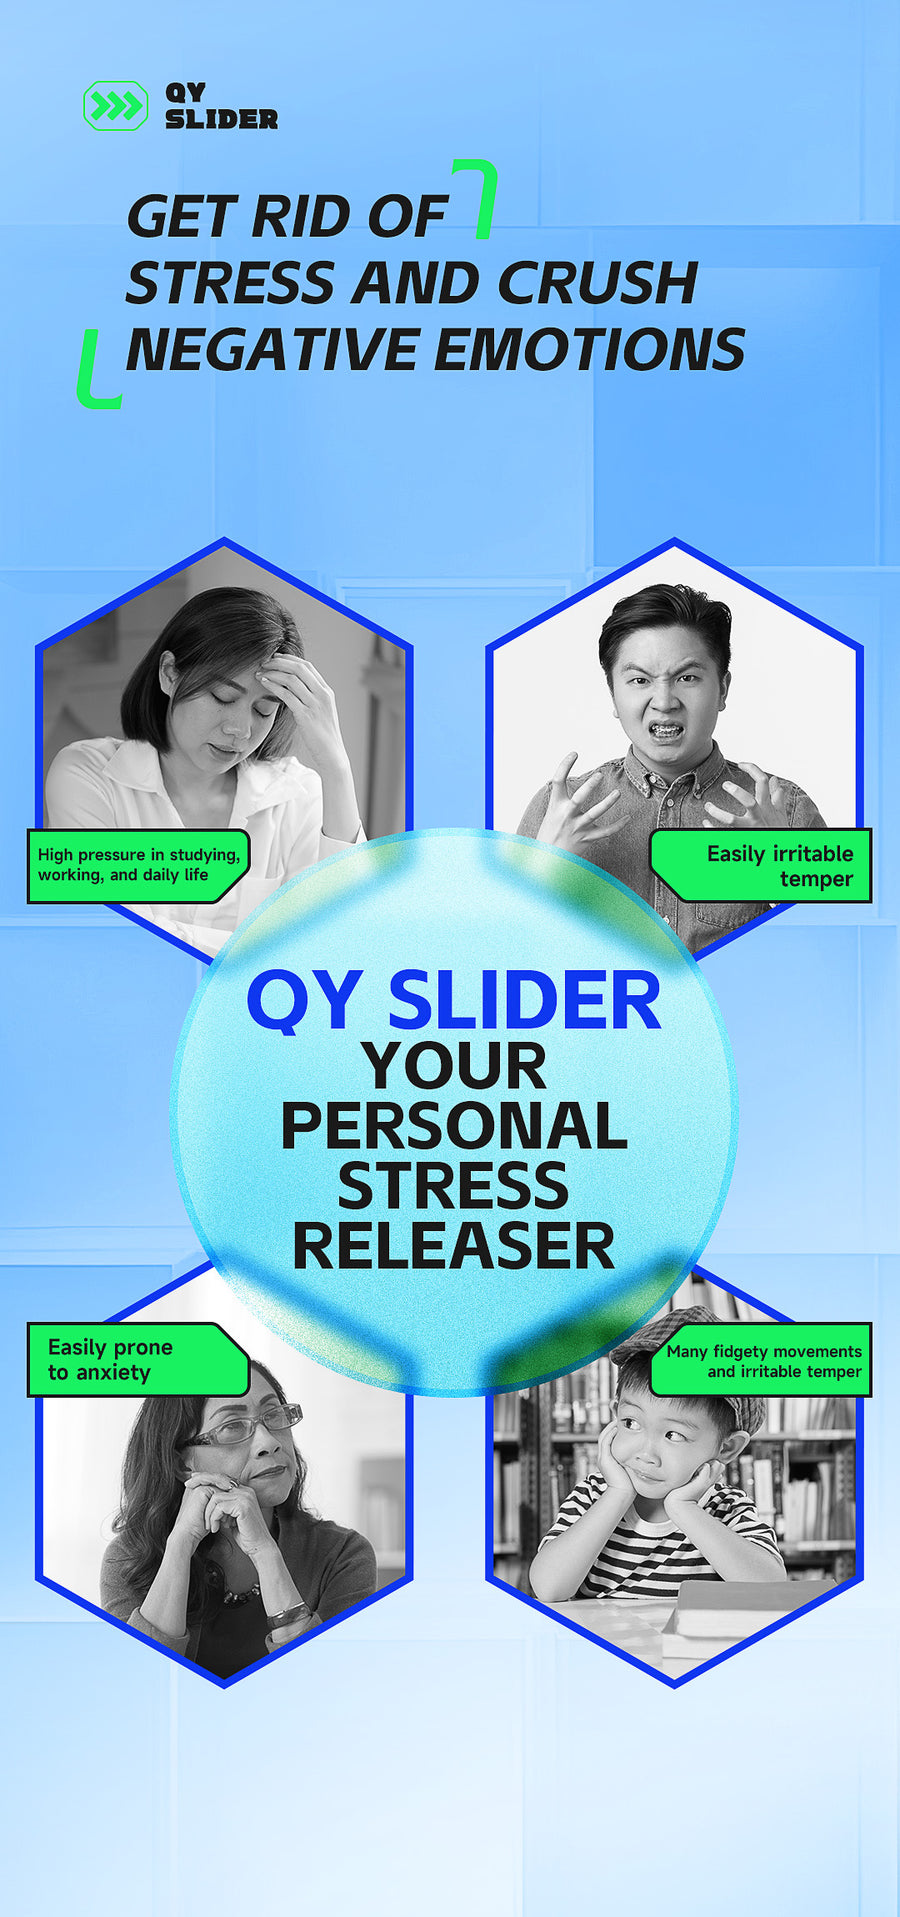 Qiyi Slider (stress relief toy)